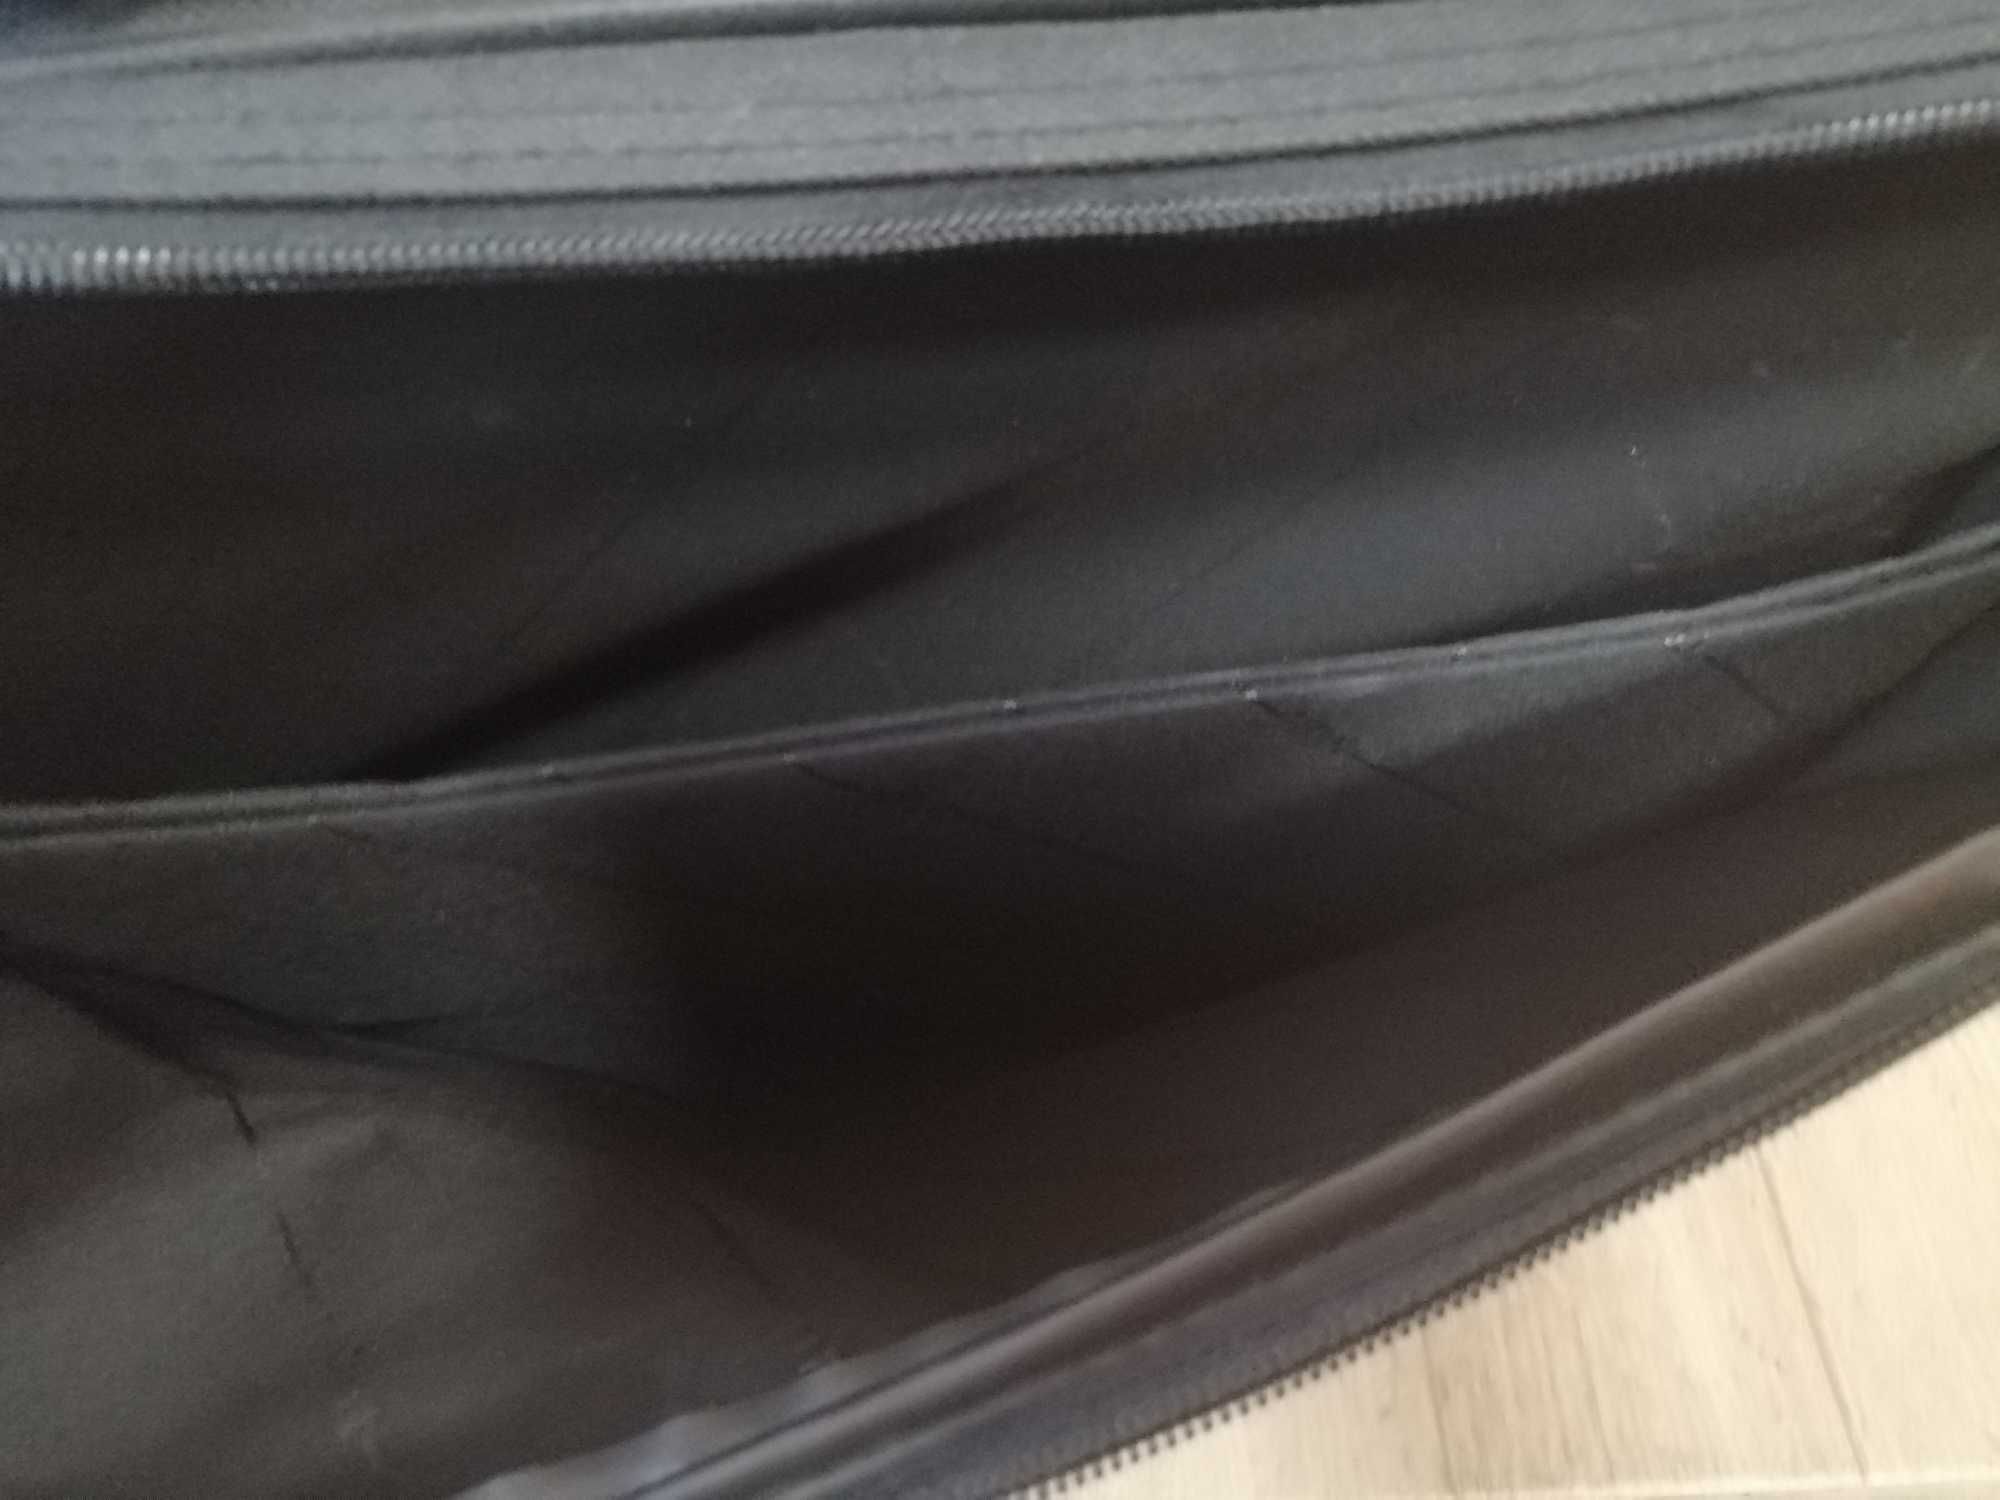 Чанта за ръчен багаж TITAN